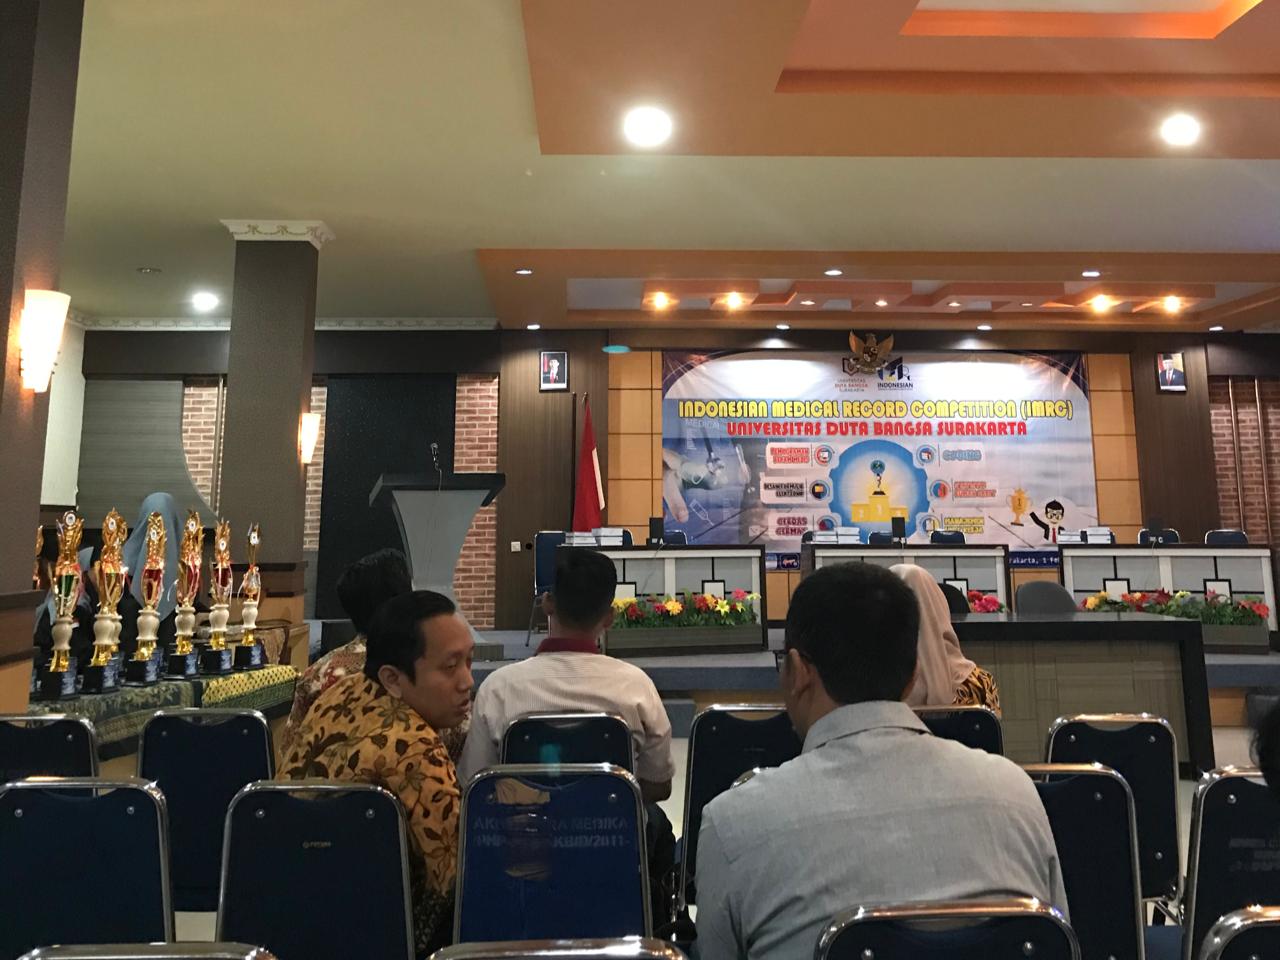 Suasana di Lomba Indonesian Medical Record Competition (IMRC)